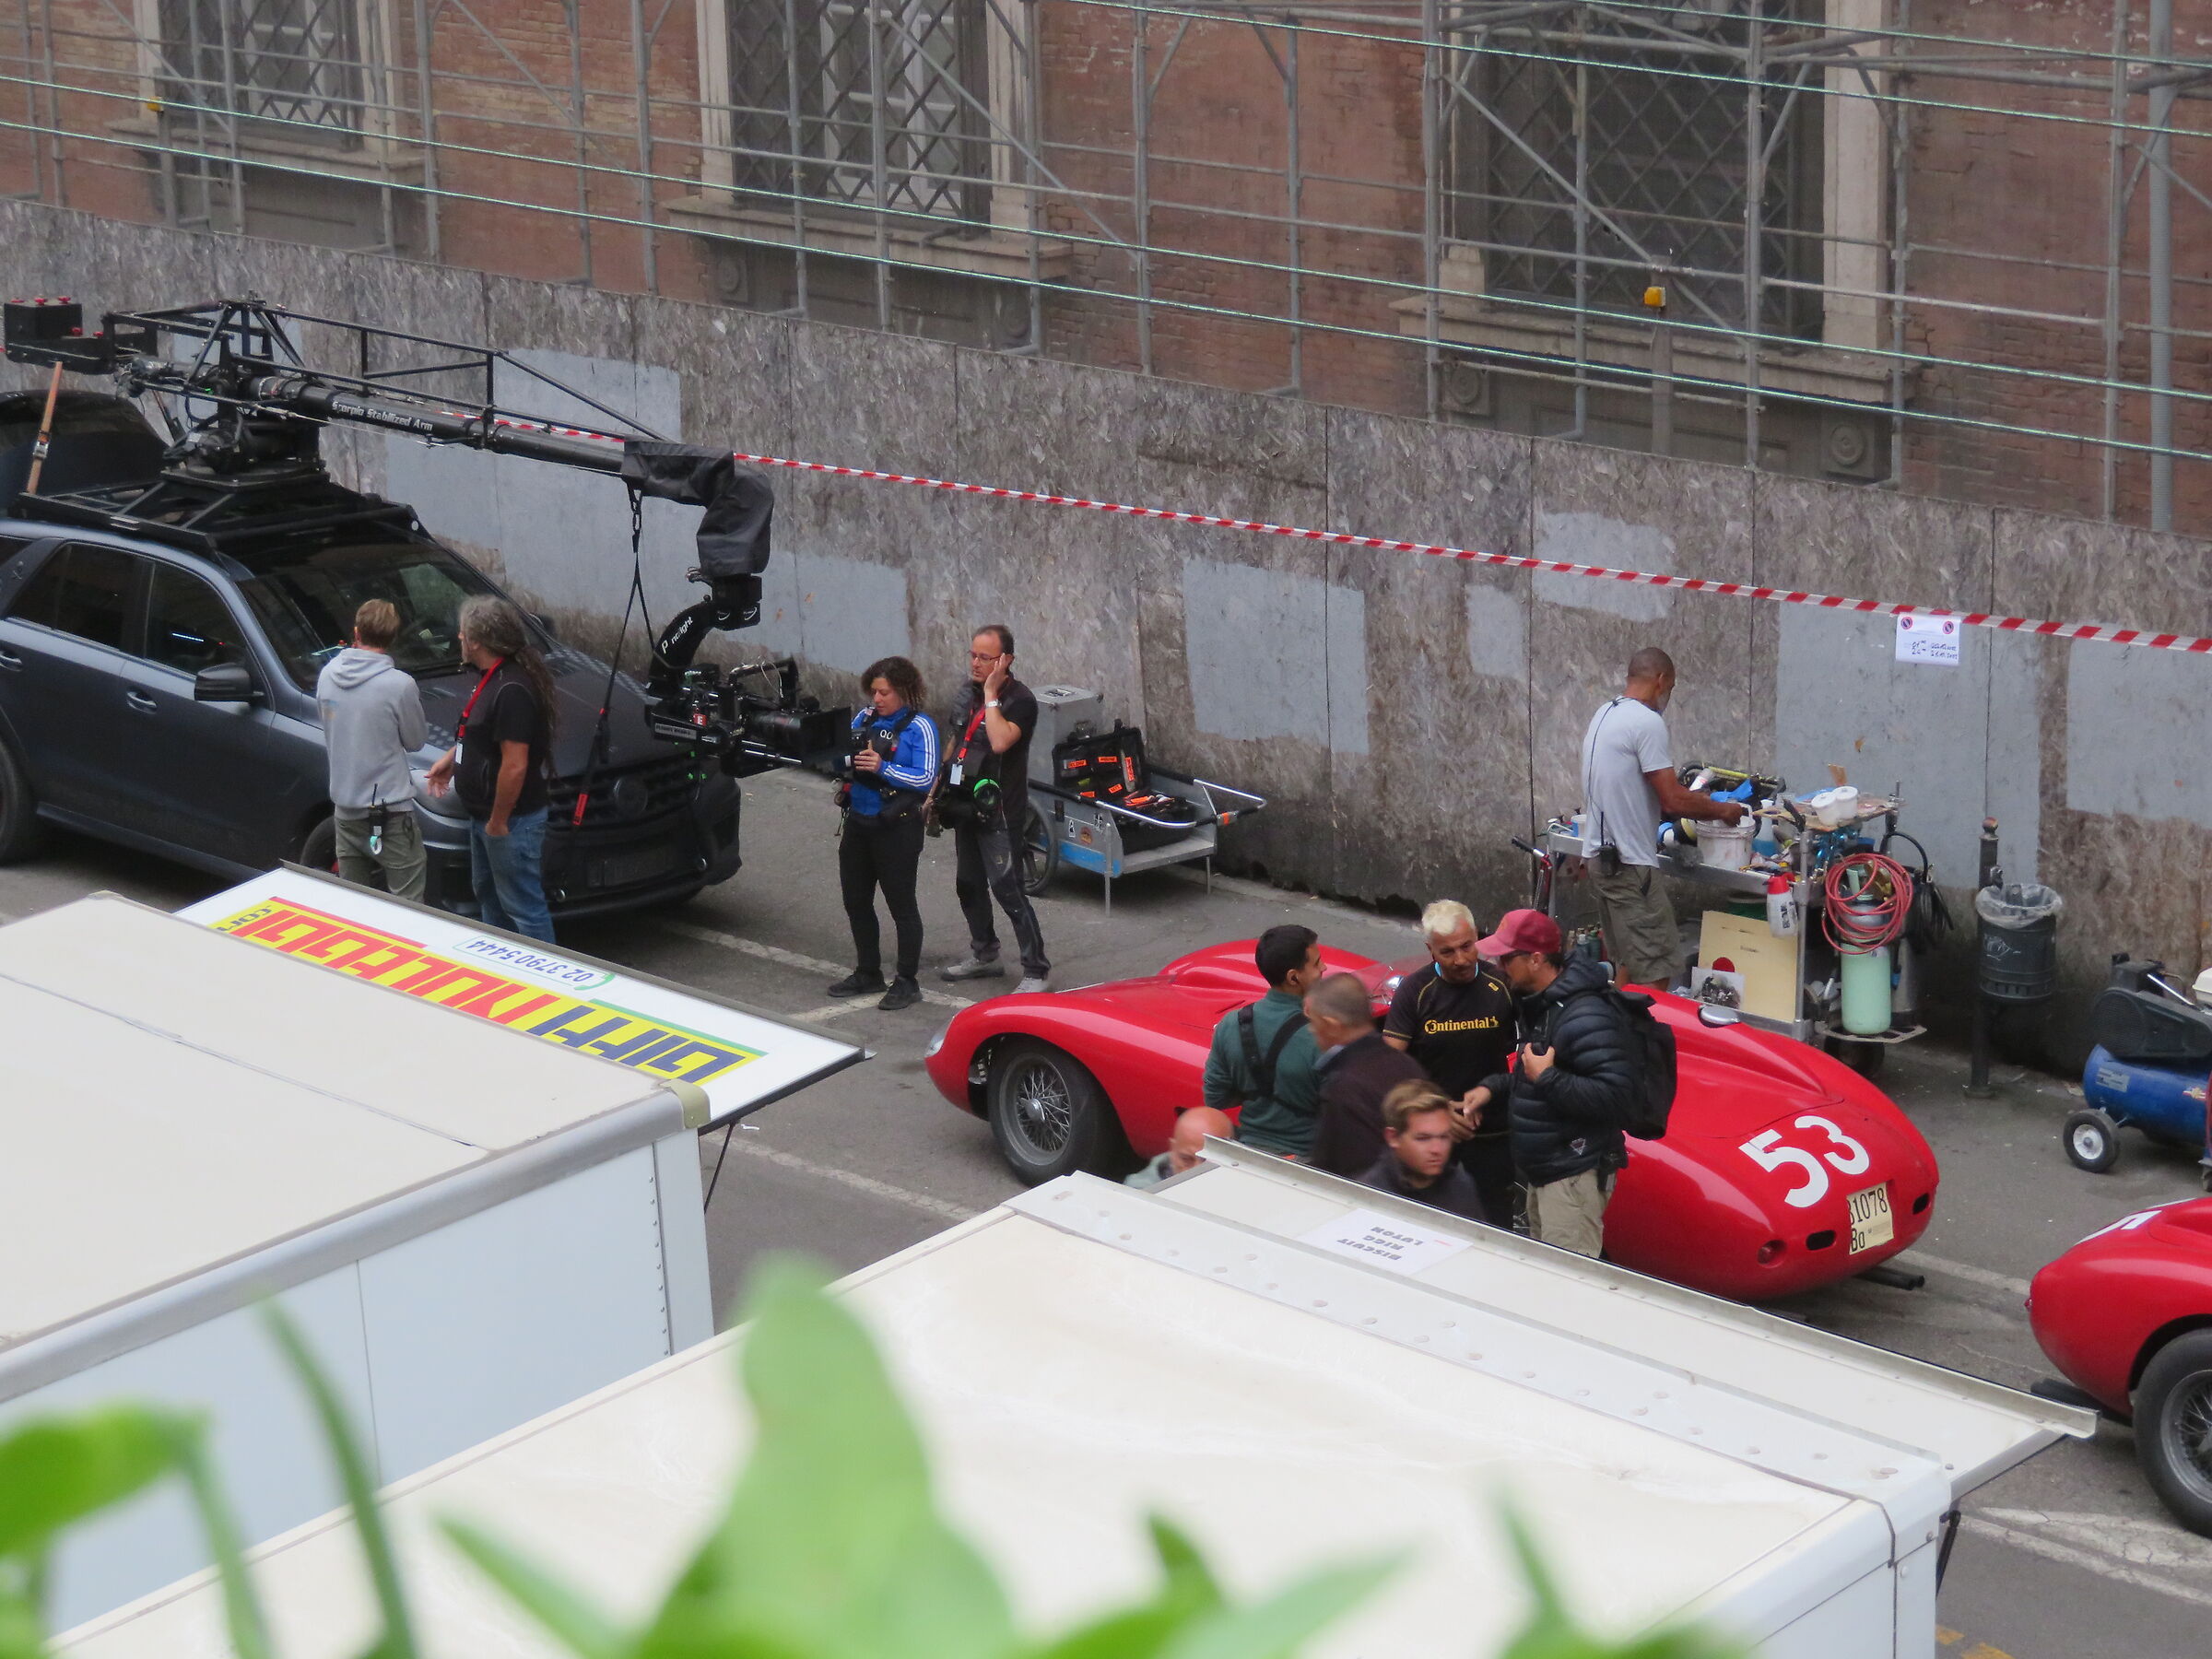 When a film about Enzo Ferrari 6 is shot in Modena...